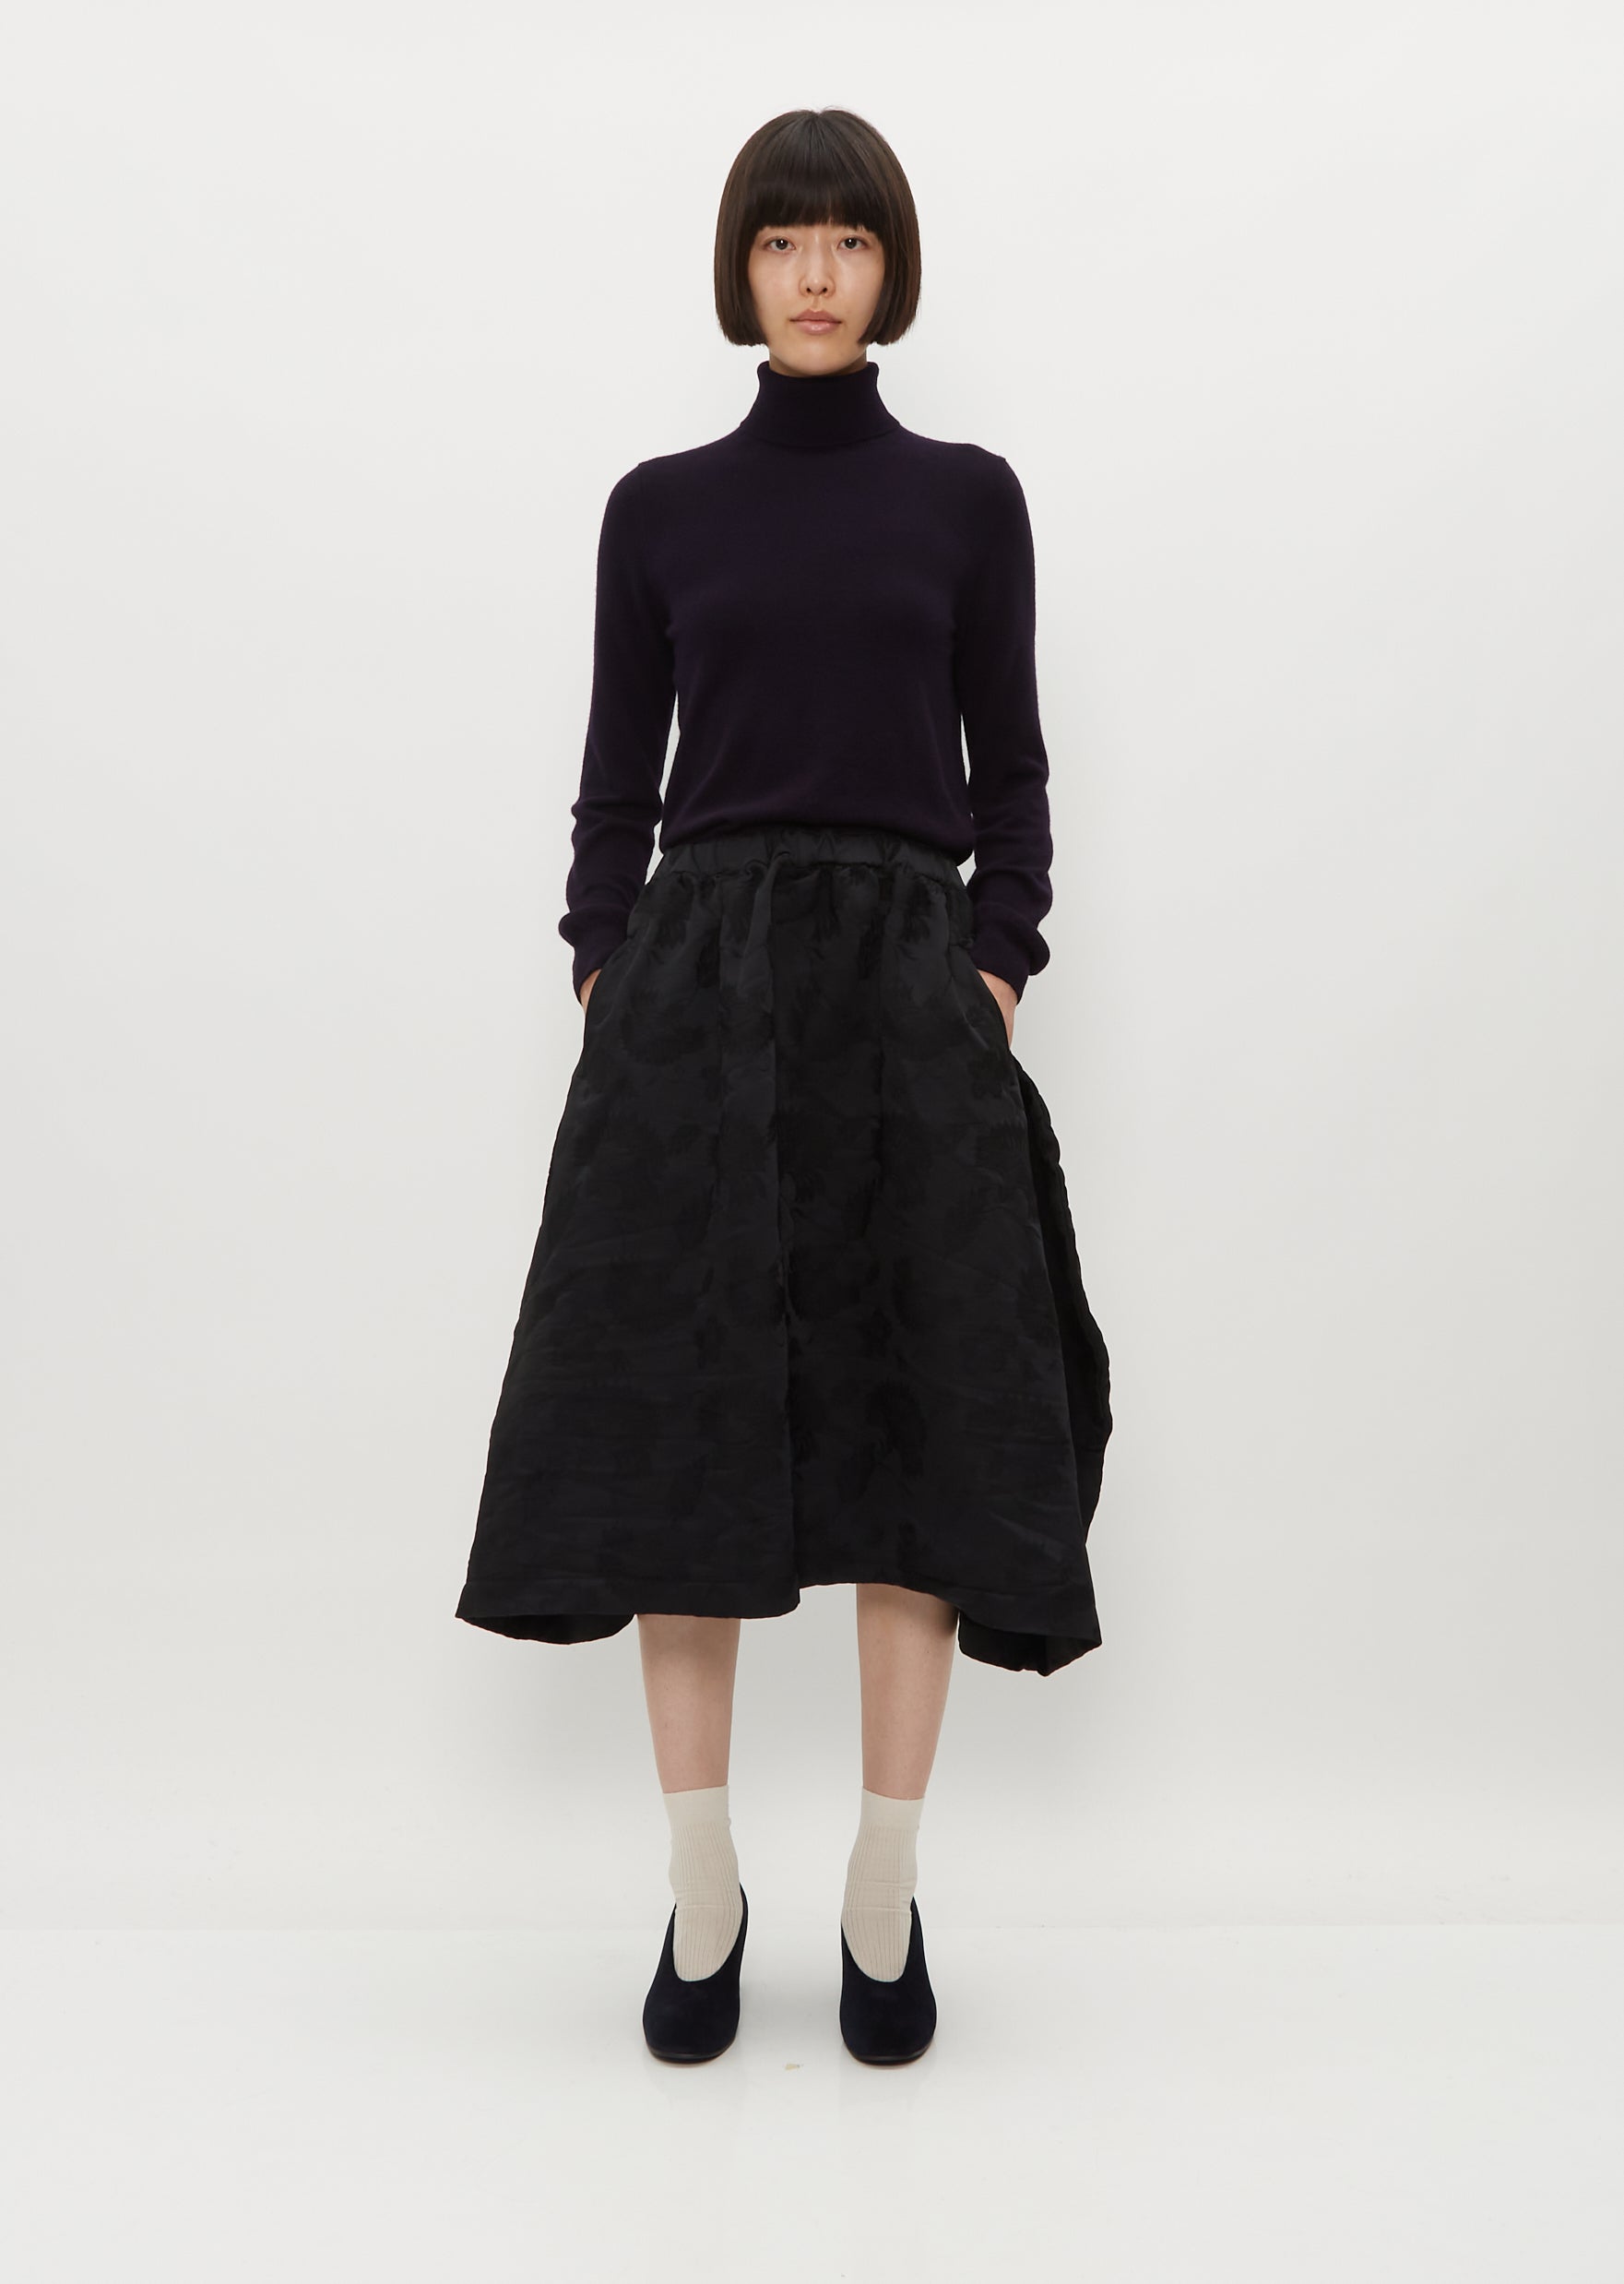 Floral Jacquard Skirt - S / Black